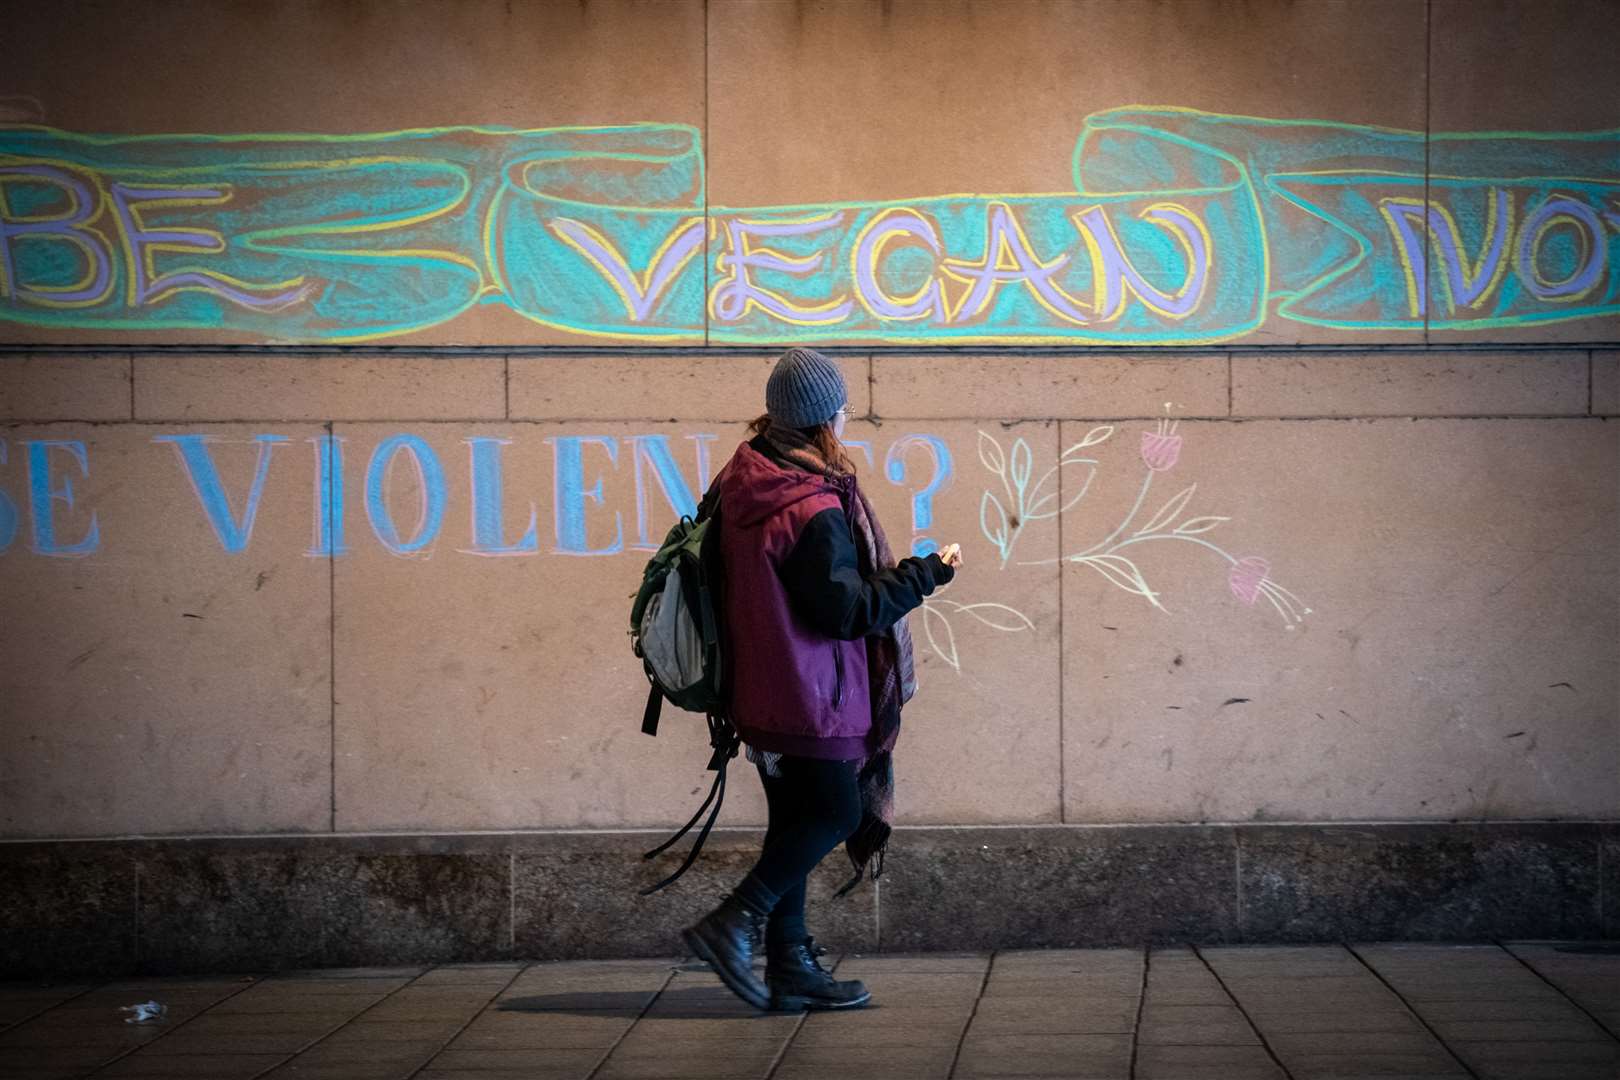 Eastgate underpass graffiti.